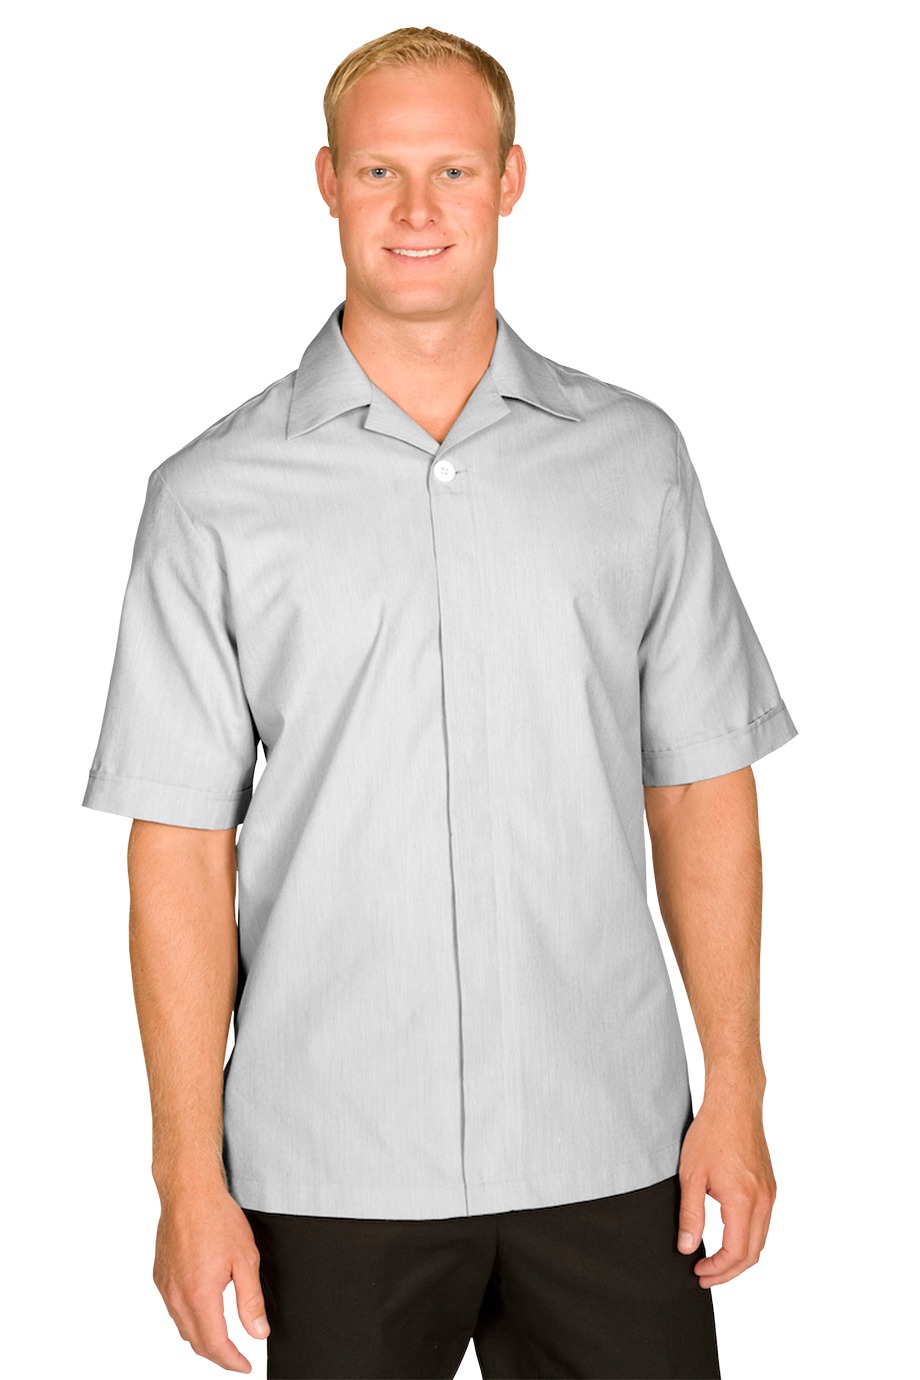 Edwards Garment 4287 - Men's Pincord Tunic